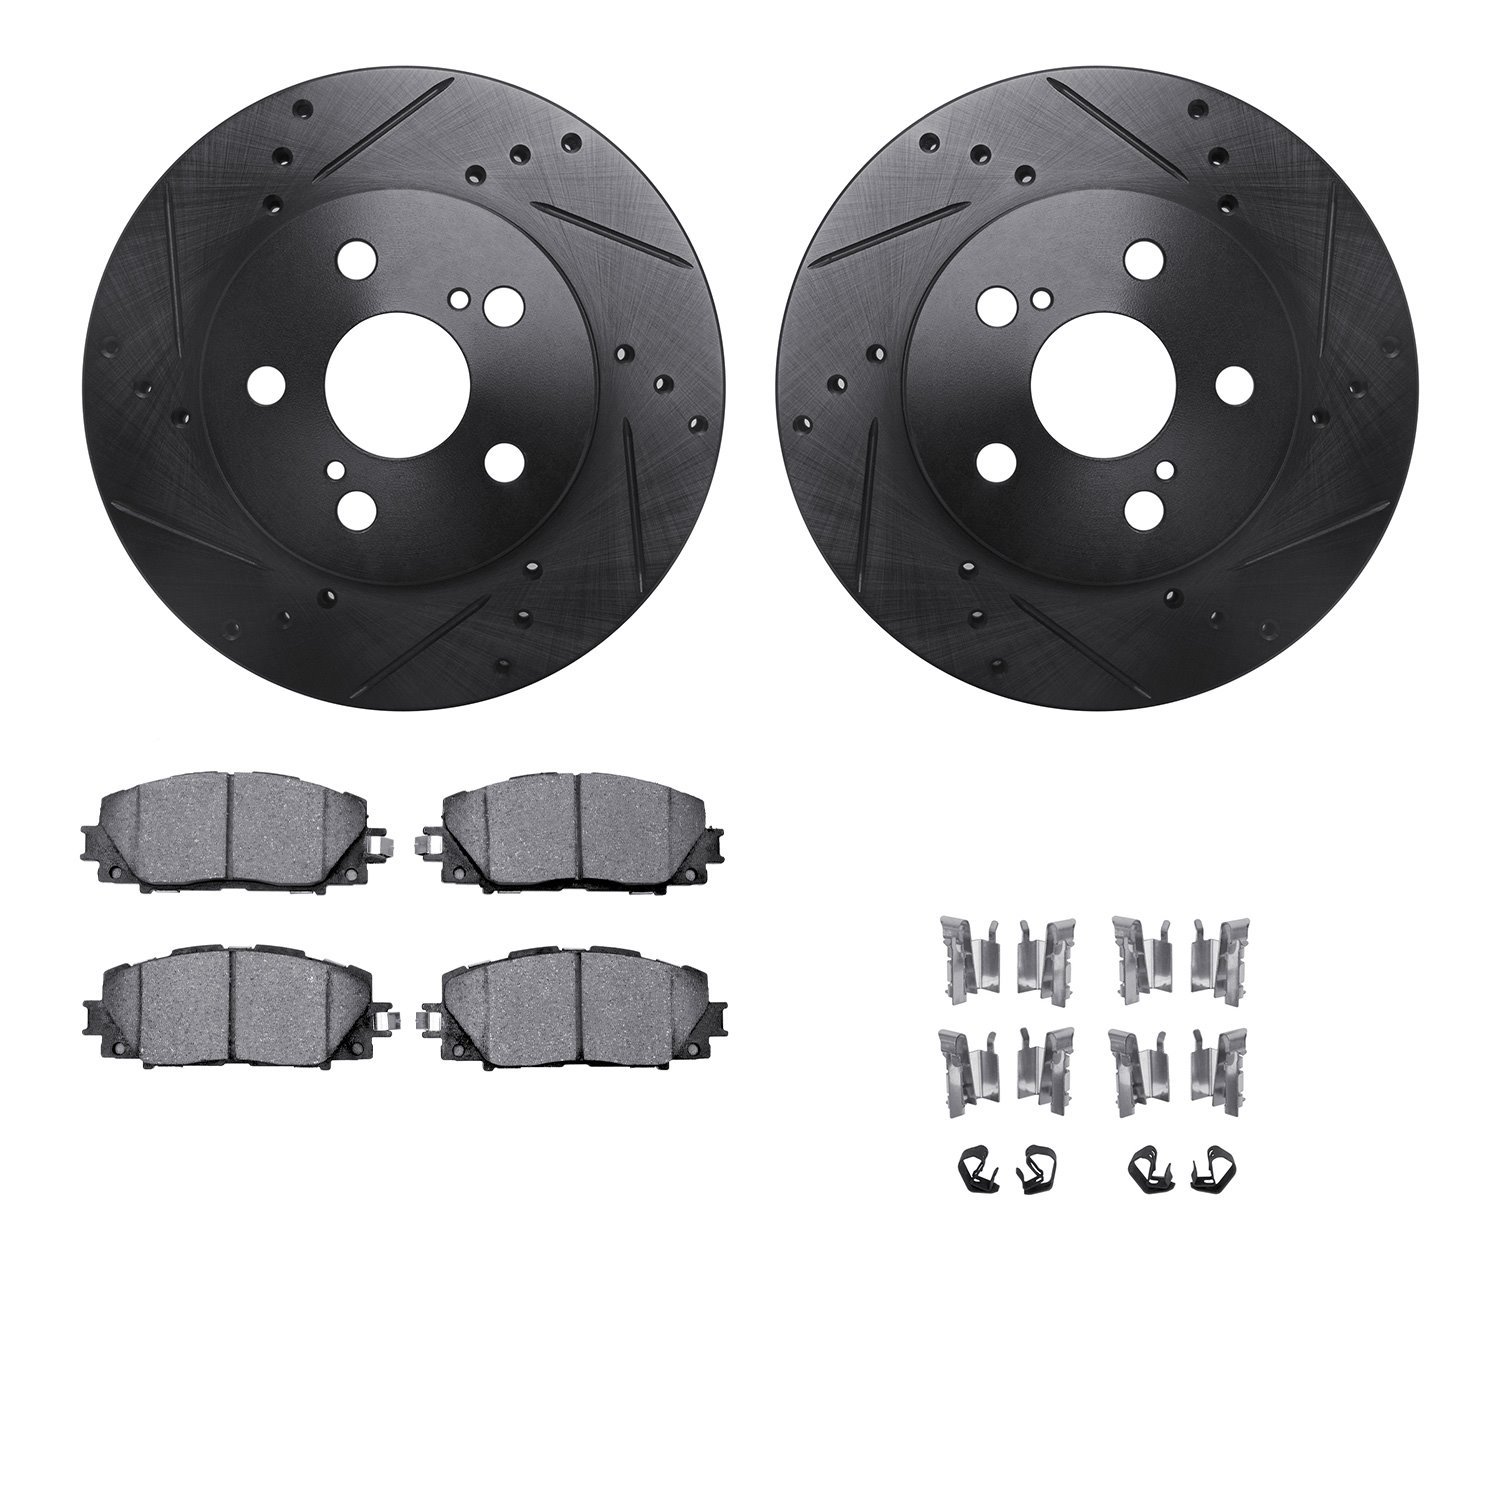 8312-76156 Drilled/Slotted Brake Rotors with 3000-Series Ceramic Brake Pads Kit & Hardware [Black], Fits Select Lexus/Toyota/Sci